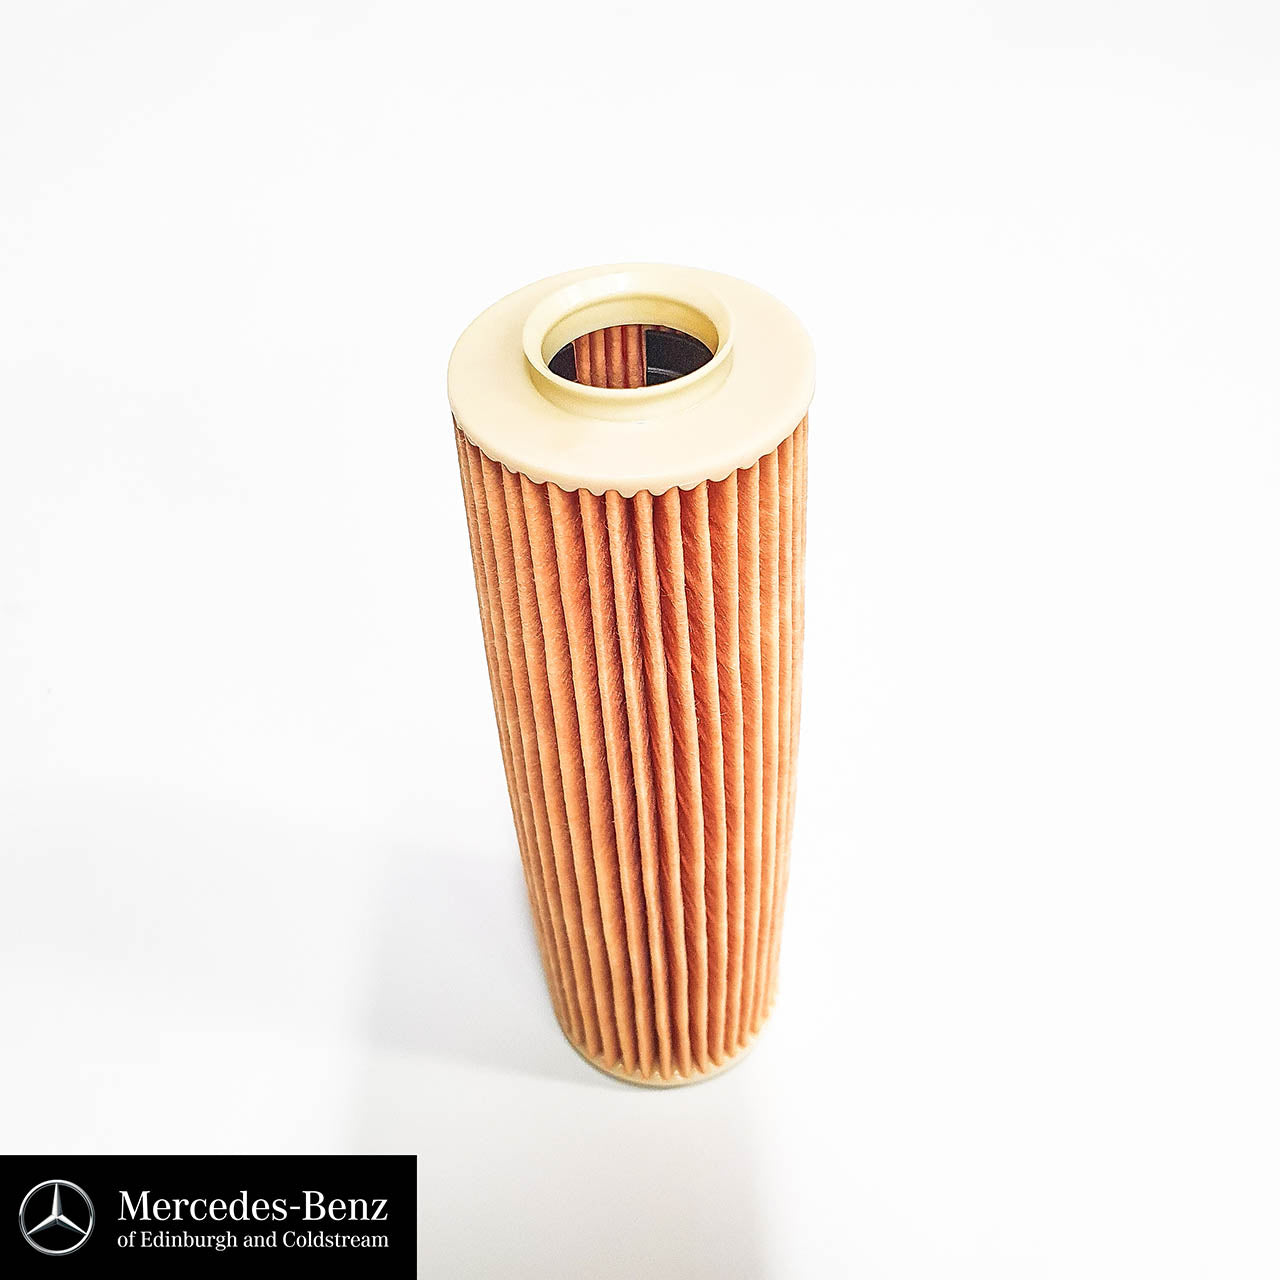 Genuine Mercedes-Benz service kit petrol engine M271 - oil and filter